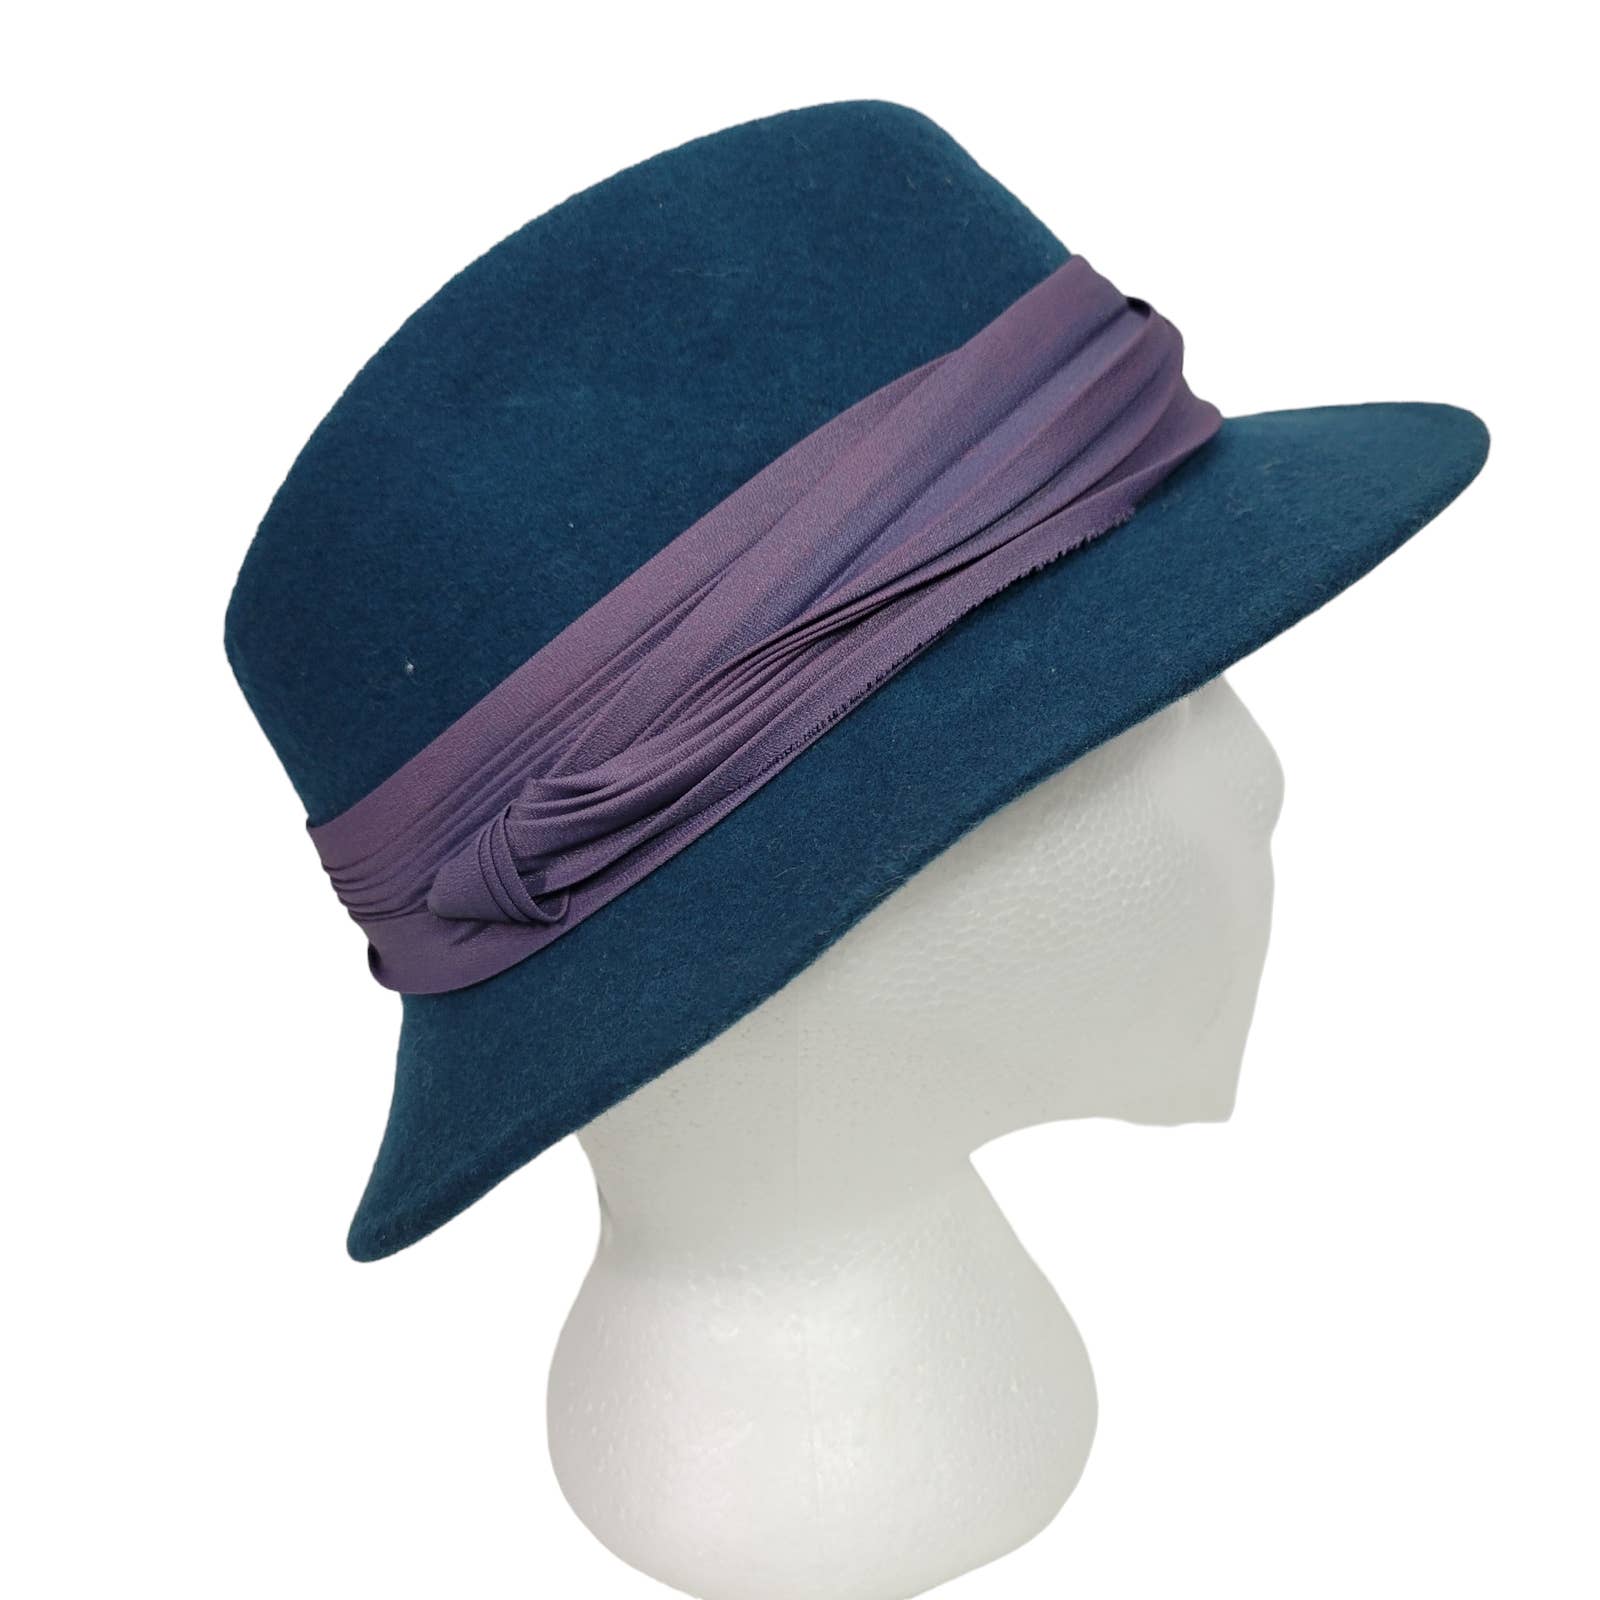 Vintage Fedora Hat Green Lancaster Felt Wool Brim Purple Winter Dressy USA Small